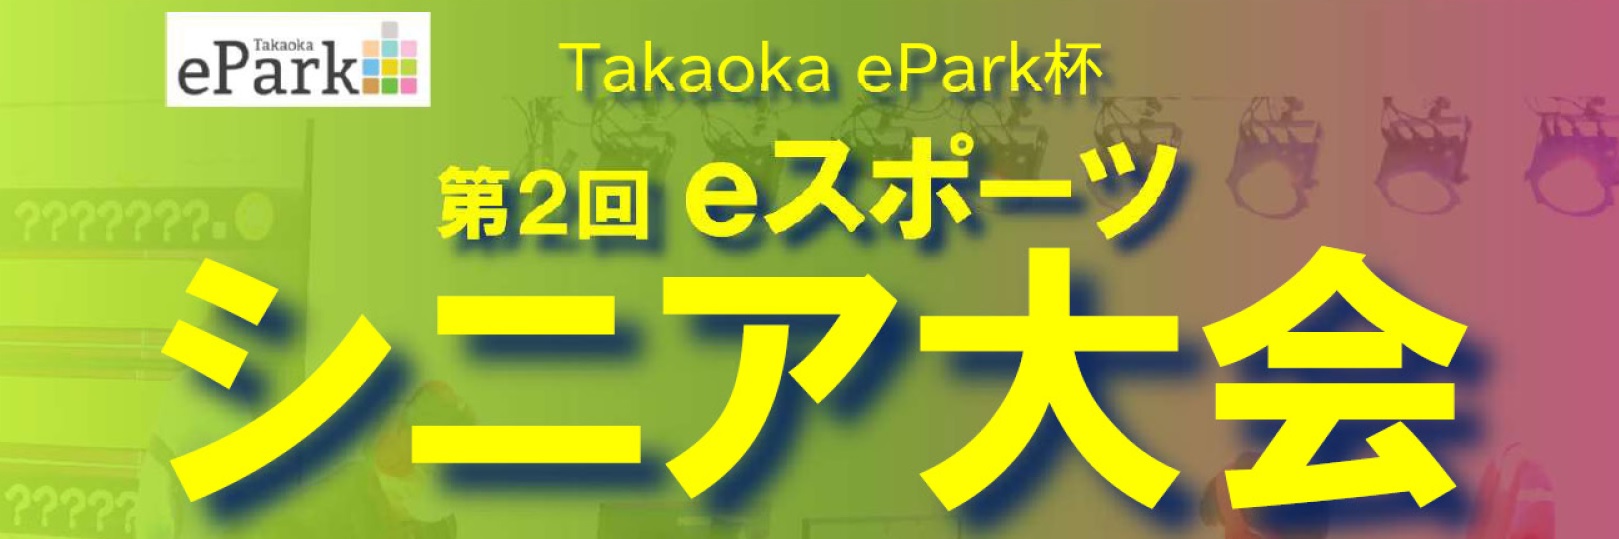 Takaoka ePark杯 第２回 eスポーツシニア大会のお知らせ